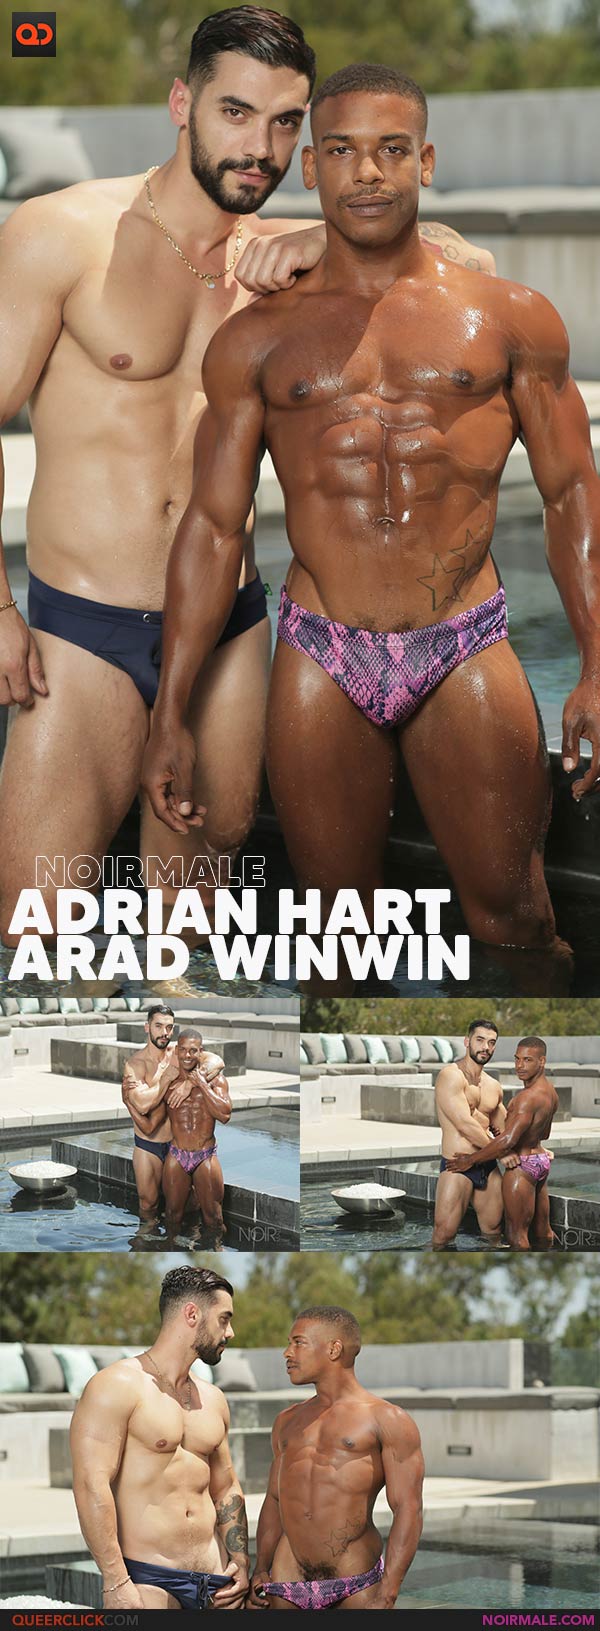 NoirMale: Arad Winwin and Adrian Hart